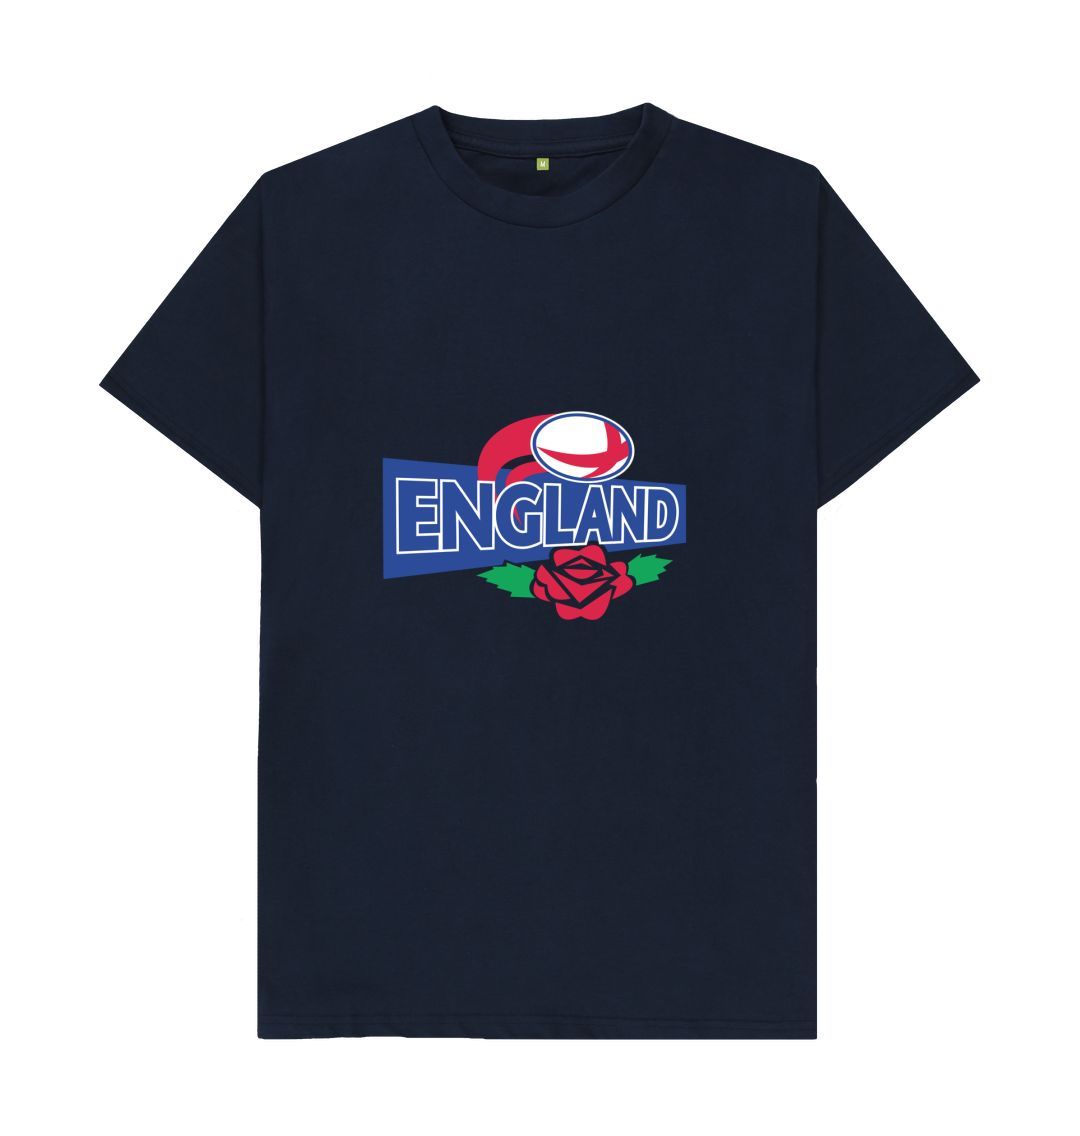 Navy Blue England T-Shirt Adults